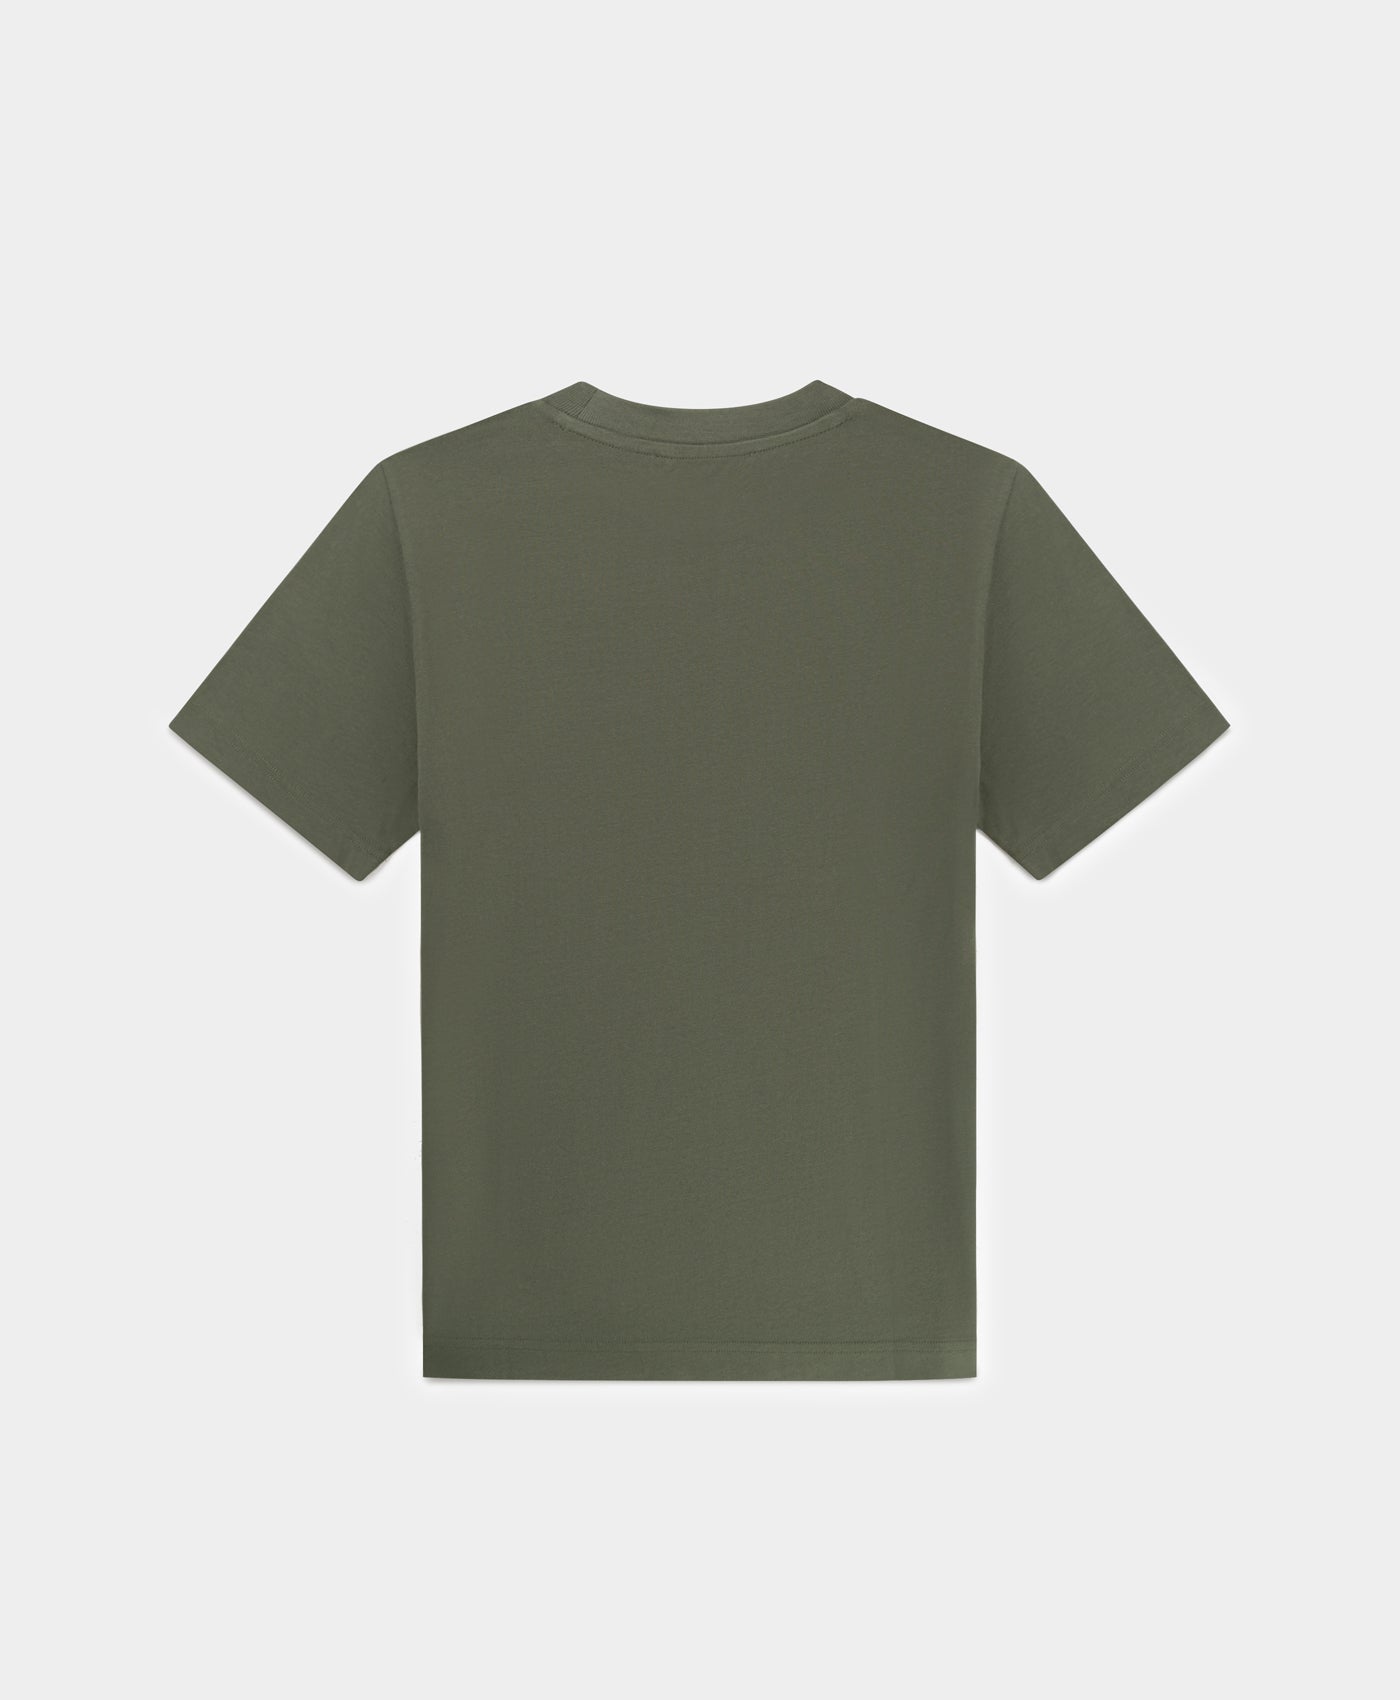 DP - Chimera Green Circle T-Shirt - Packshot - Rear